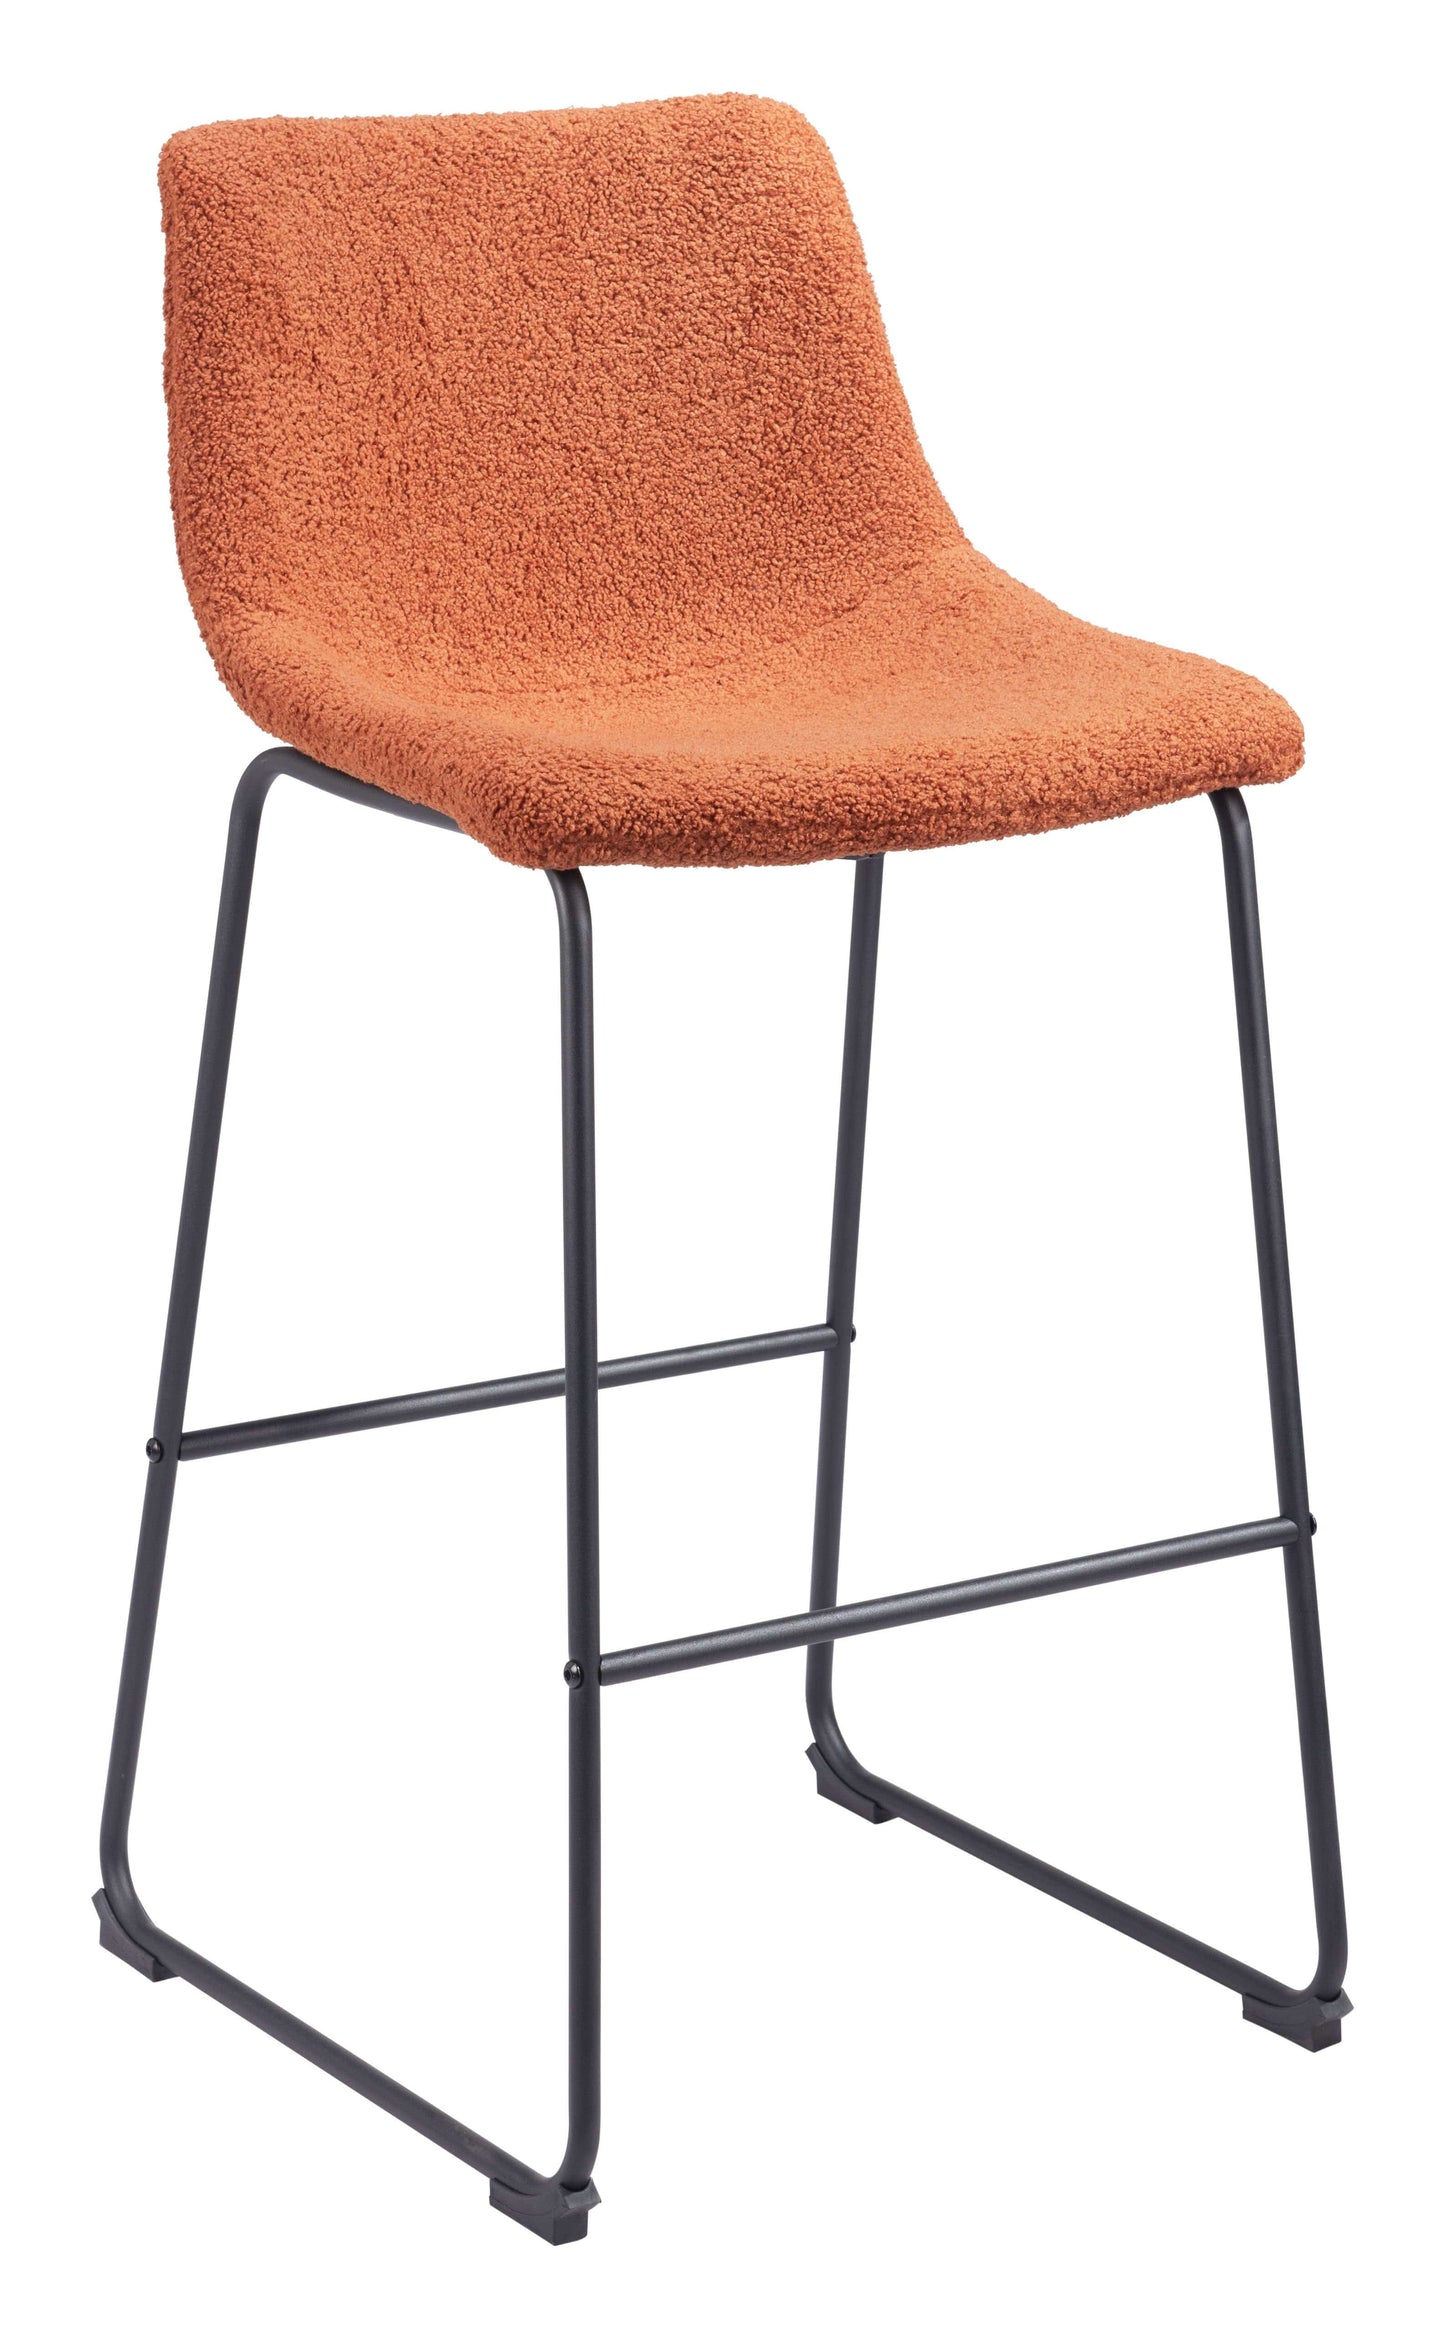 Burnt Orange seat with black steel legs